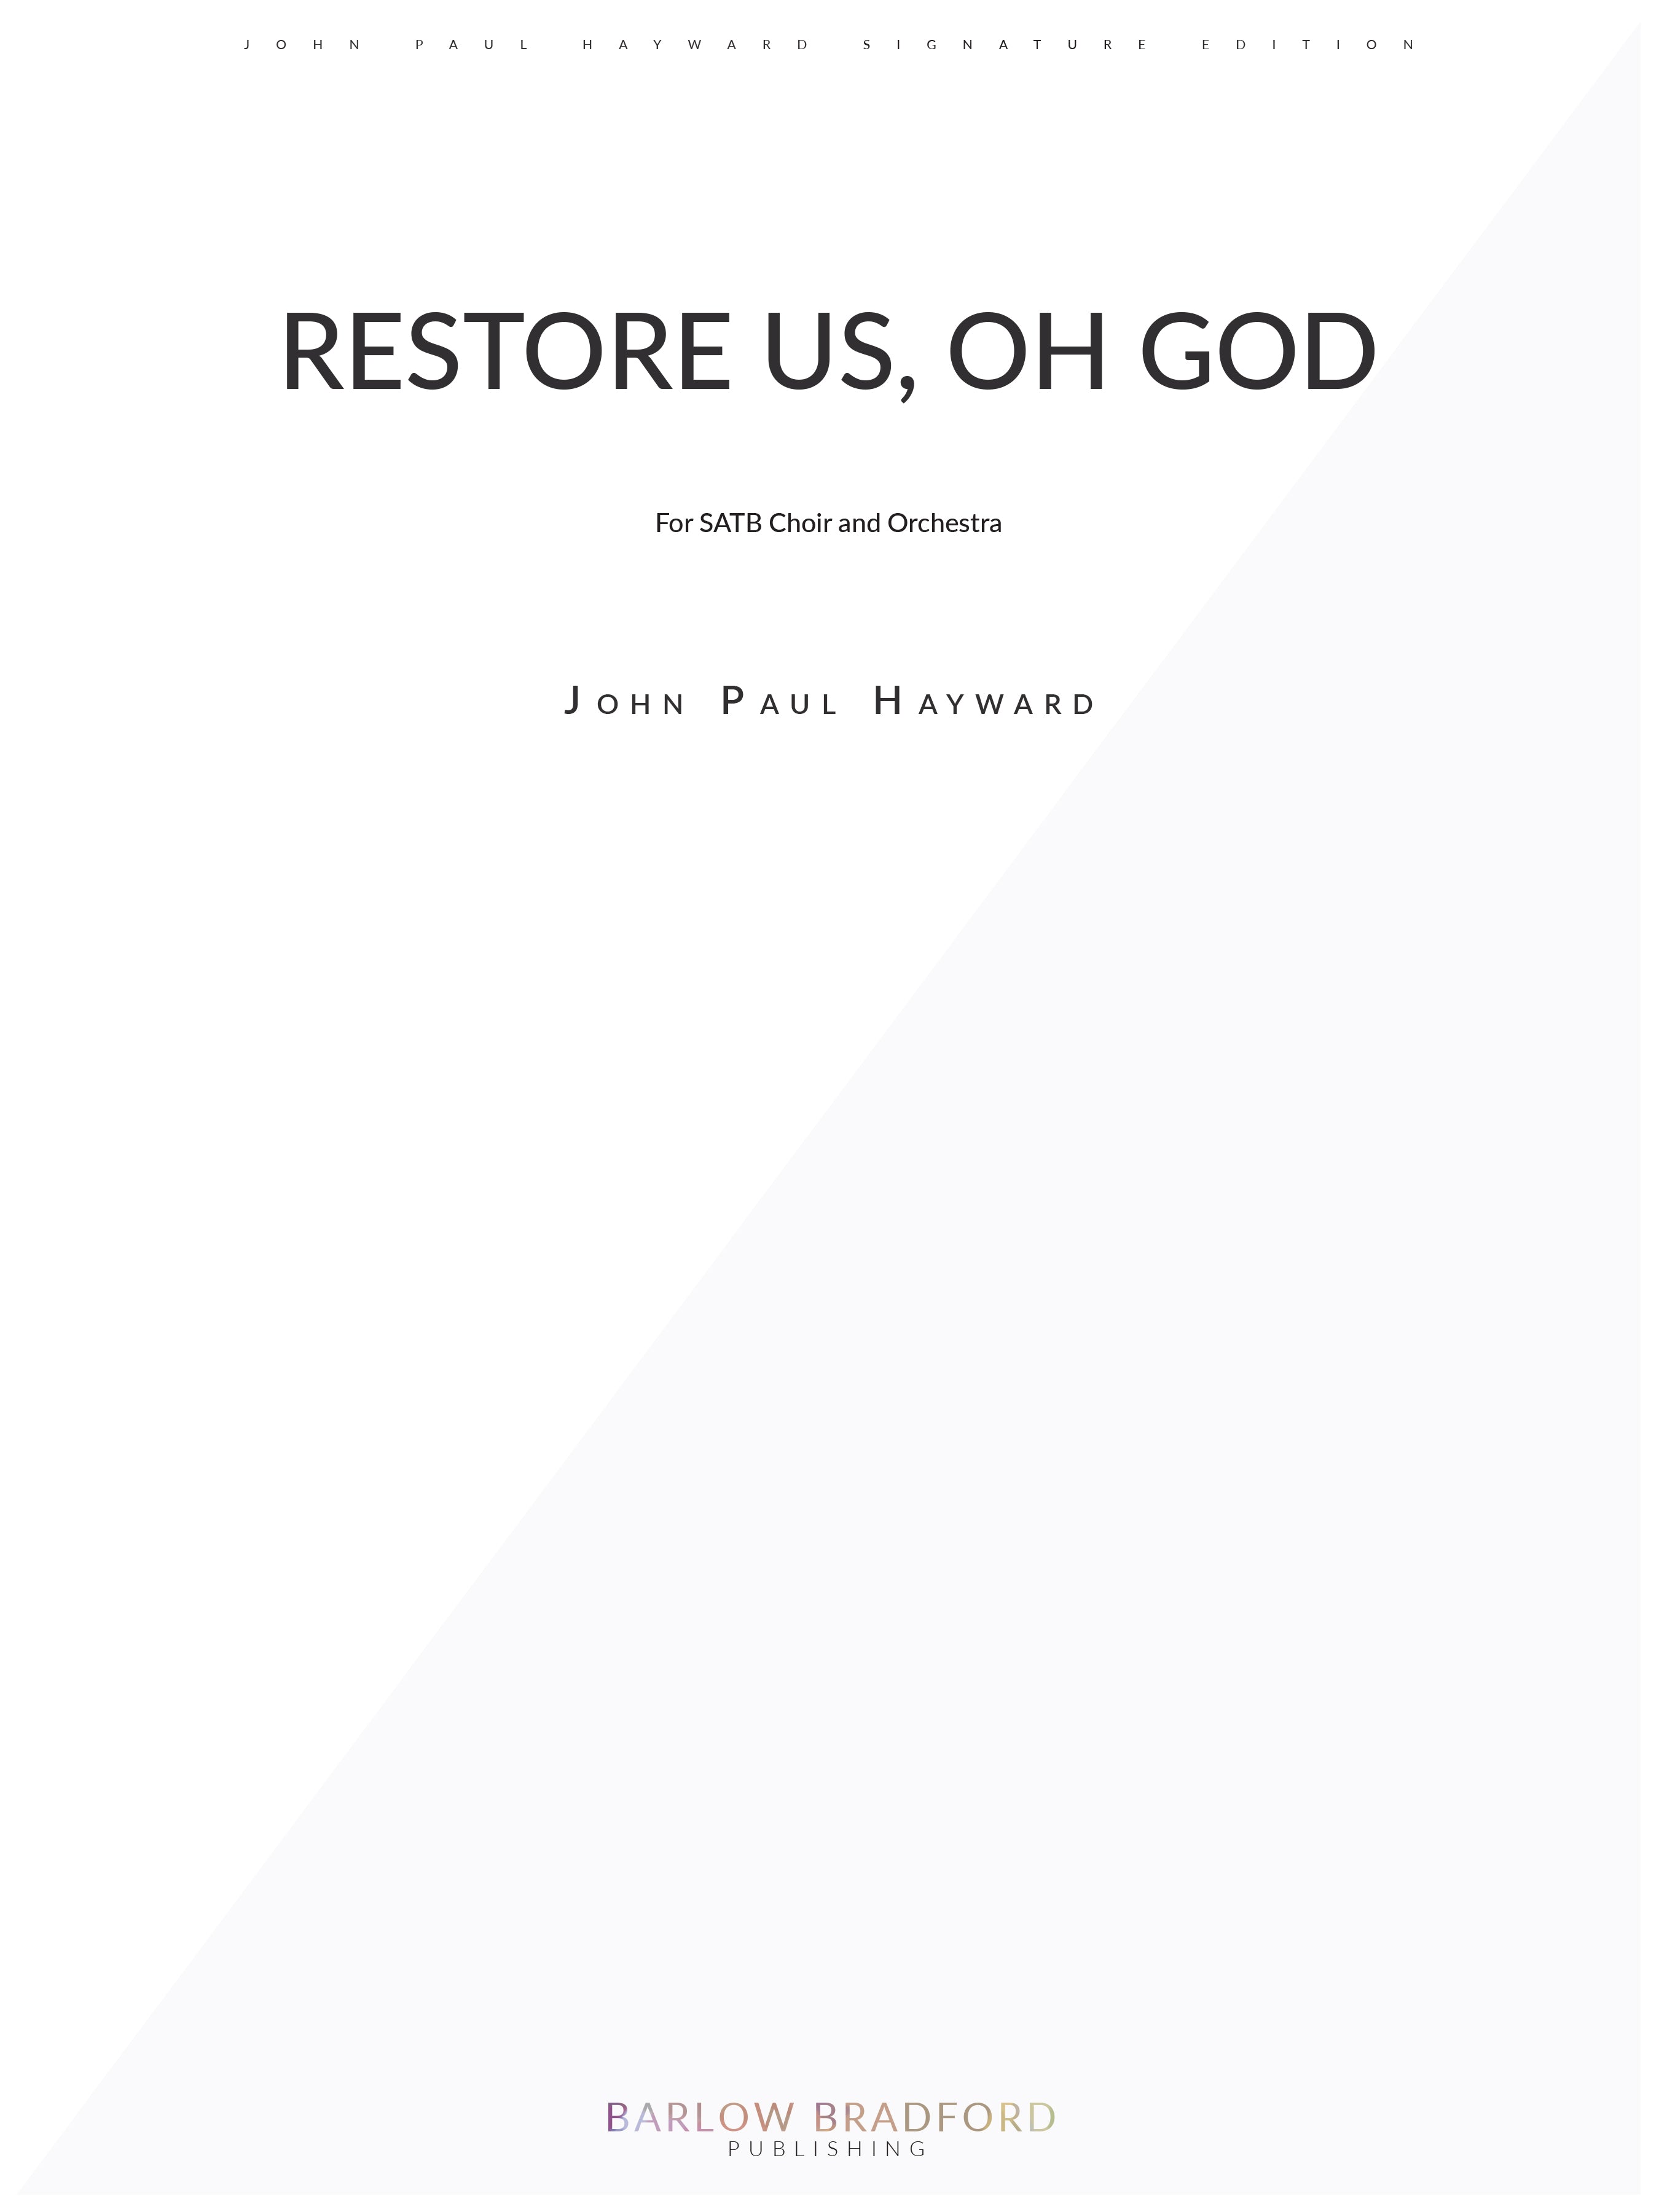 Restore Us, Oh God